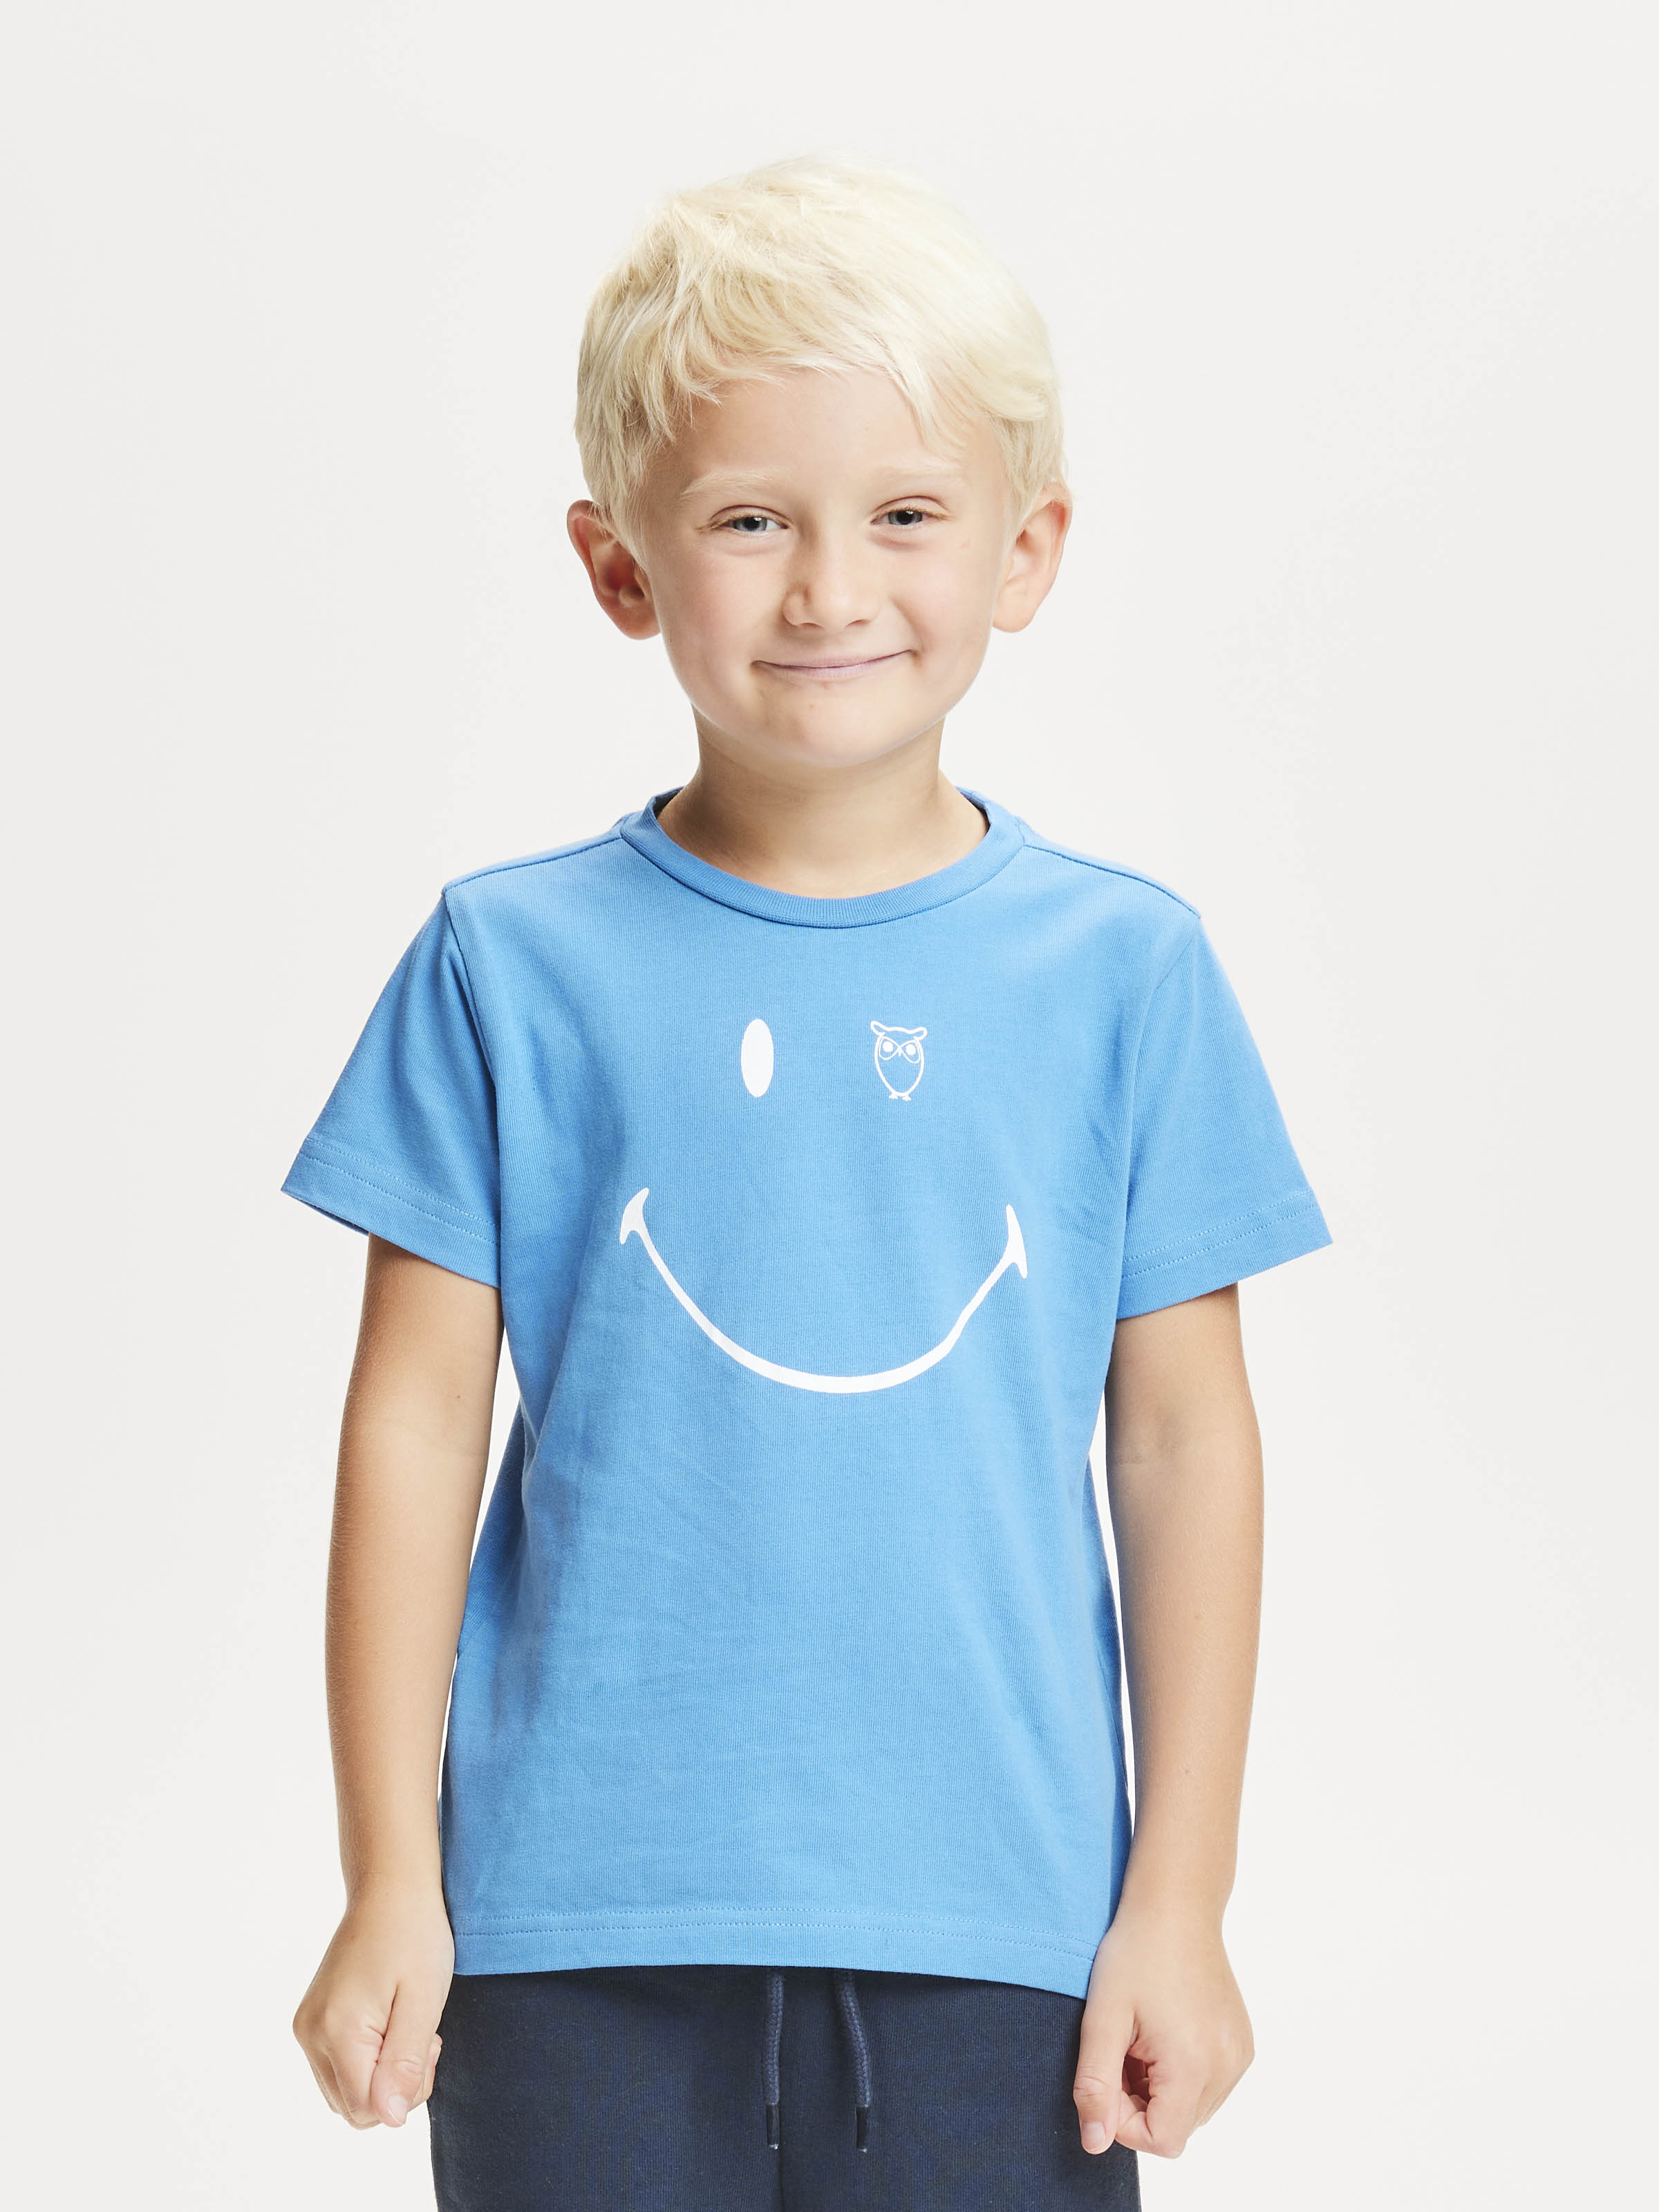 Bedrucktes Kinder-Shirt SMILEY x KCA Campanula